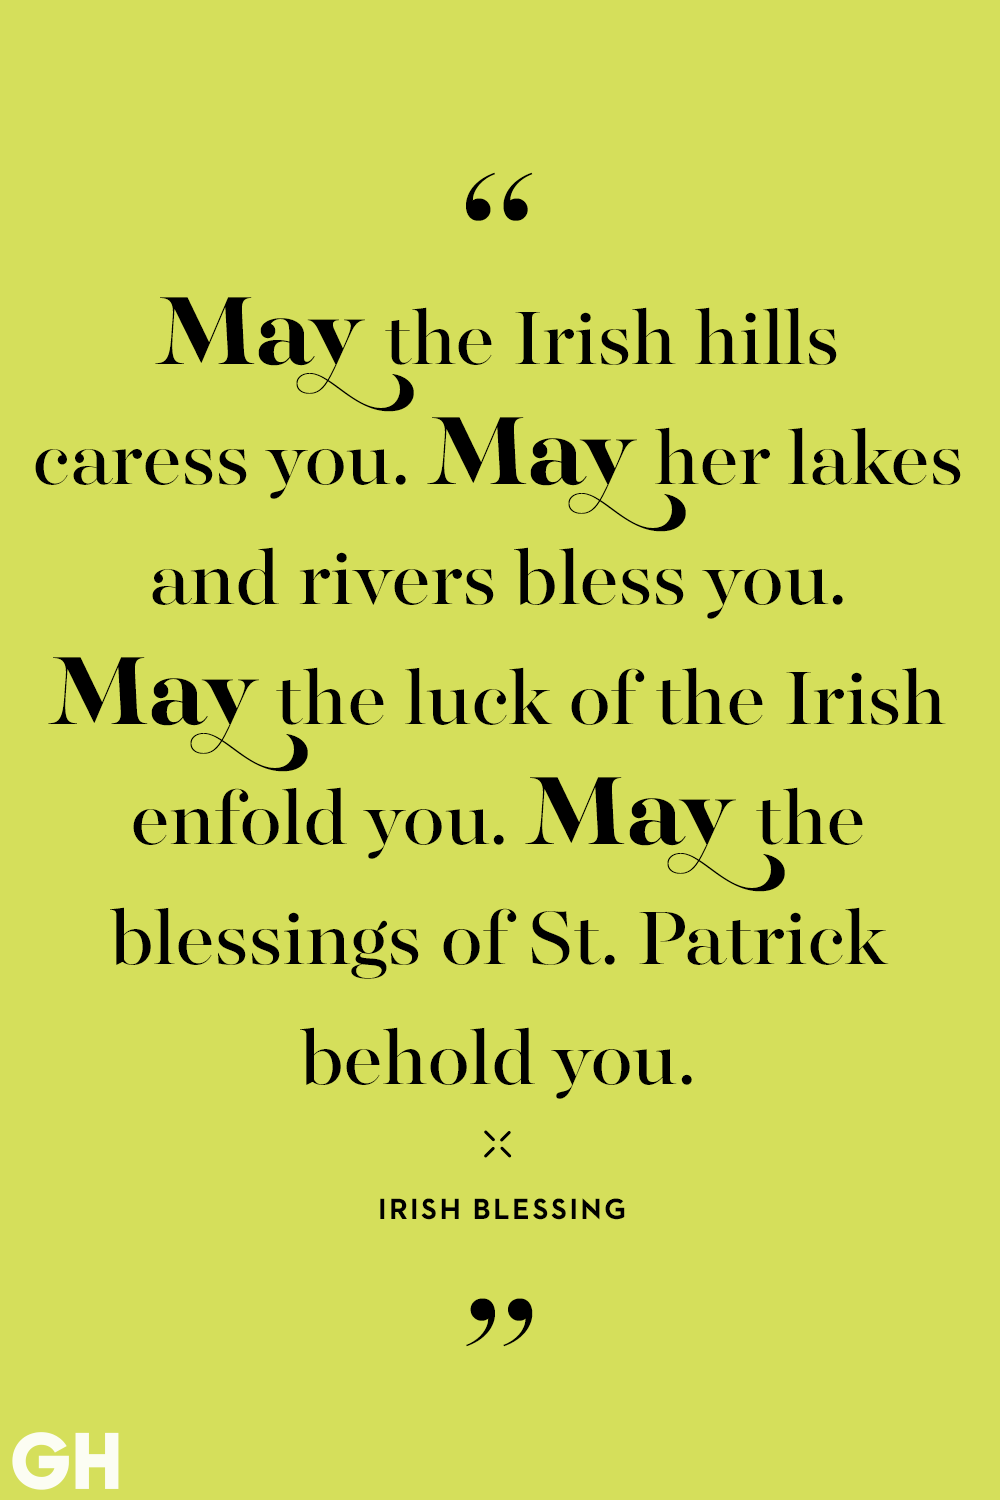 How Irish Are You